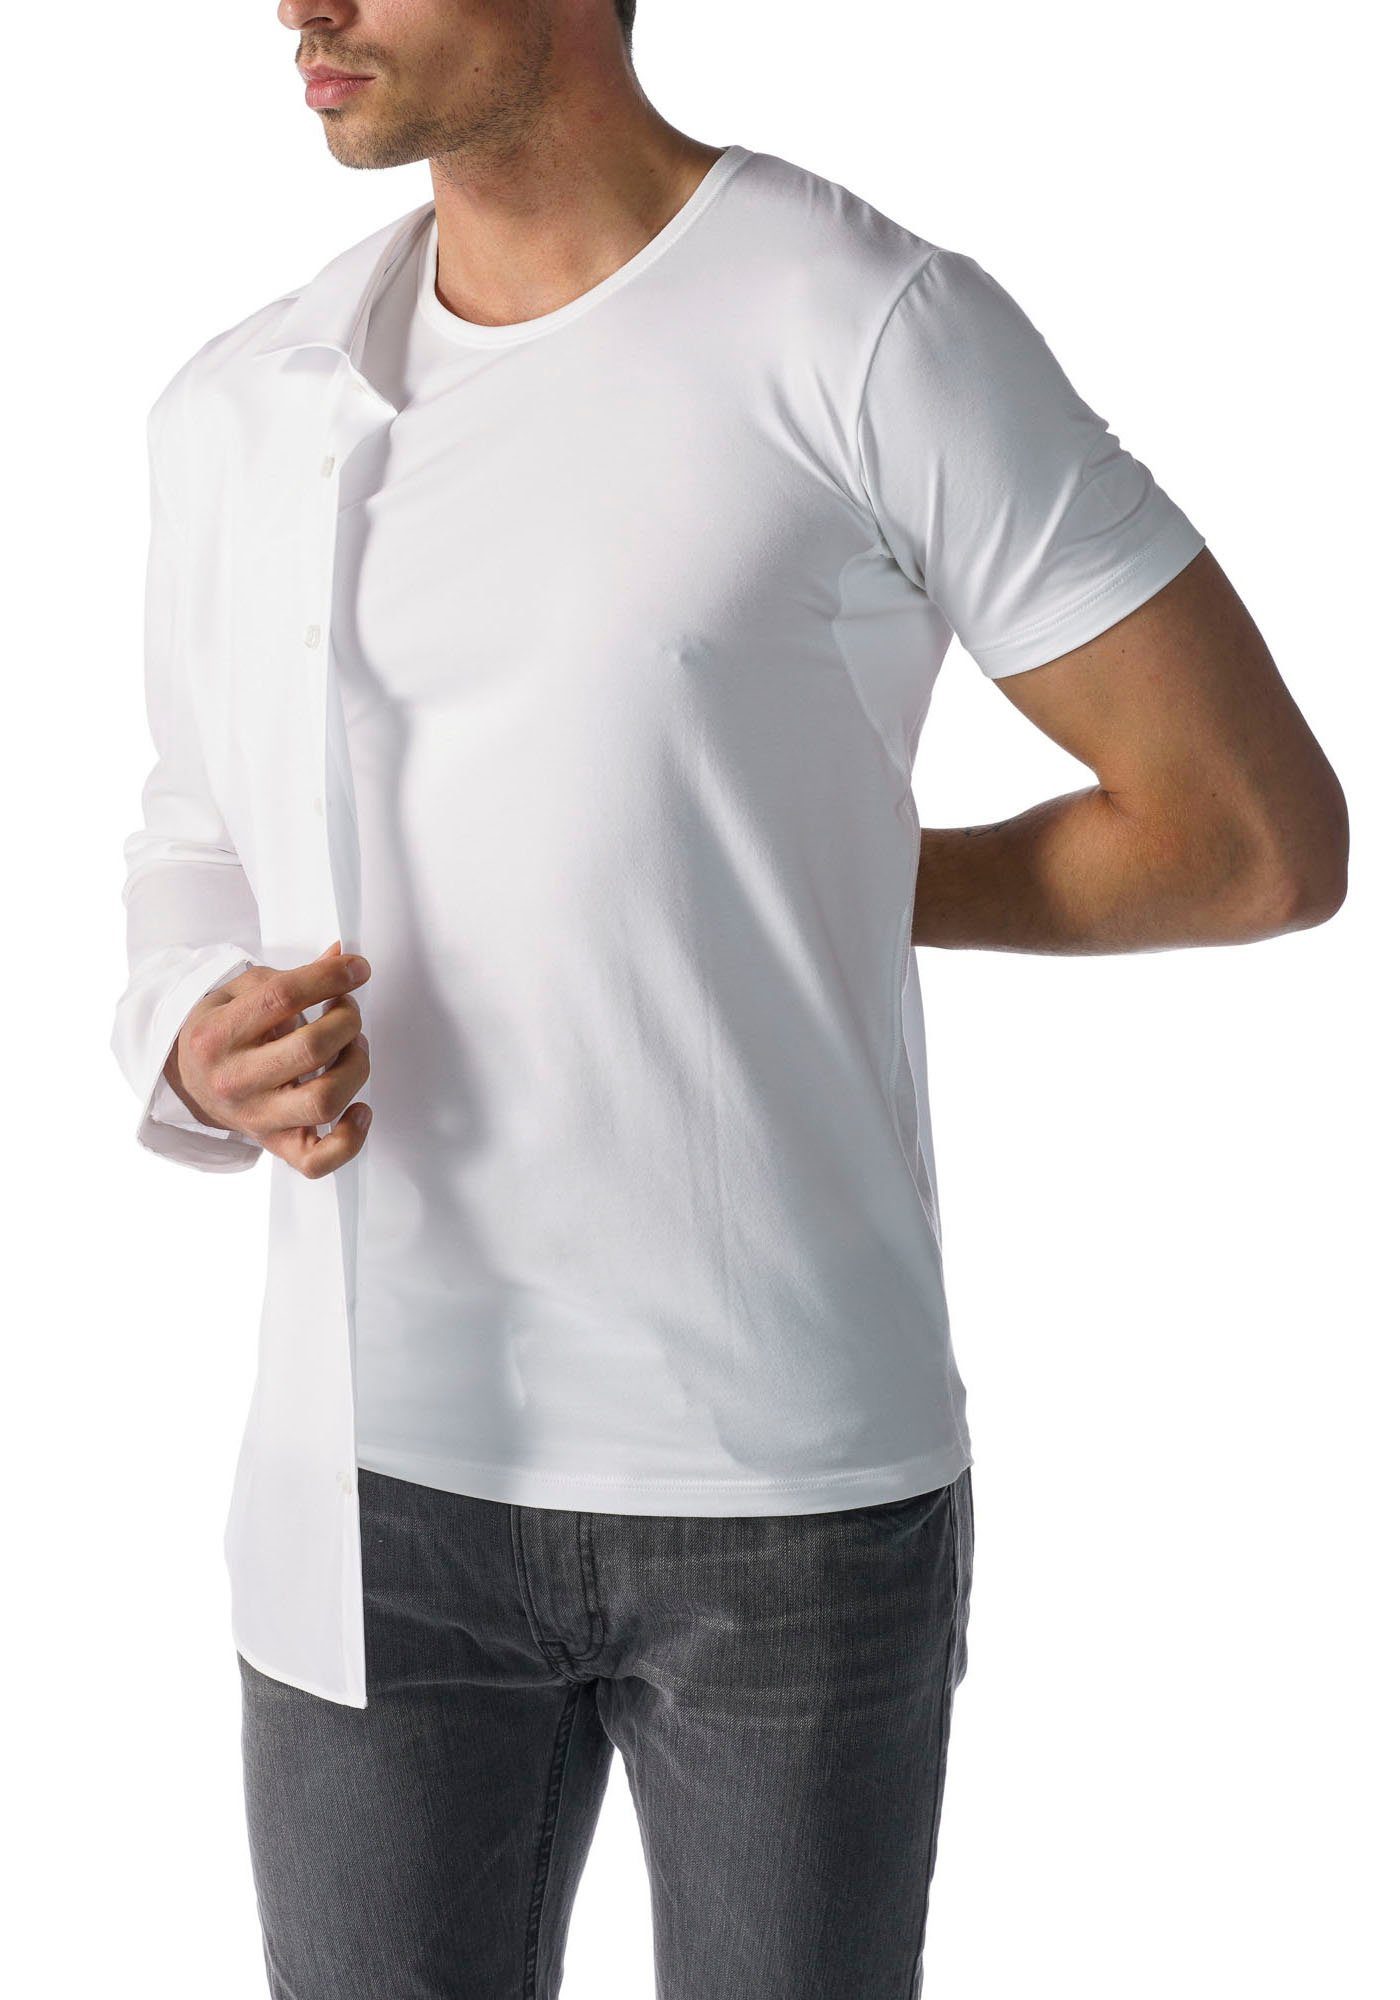 Mey Unterziehshirt Dry Cotton Functional unter dem Businesshemd unsichtbar, Halbarm weiss | Unterhemden